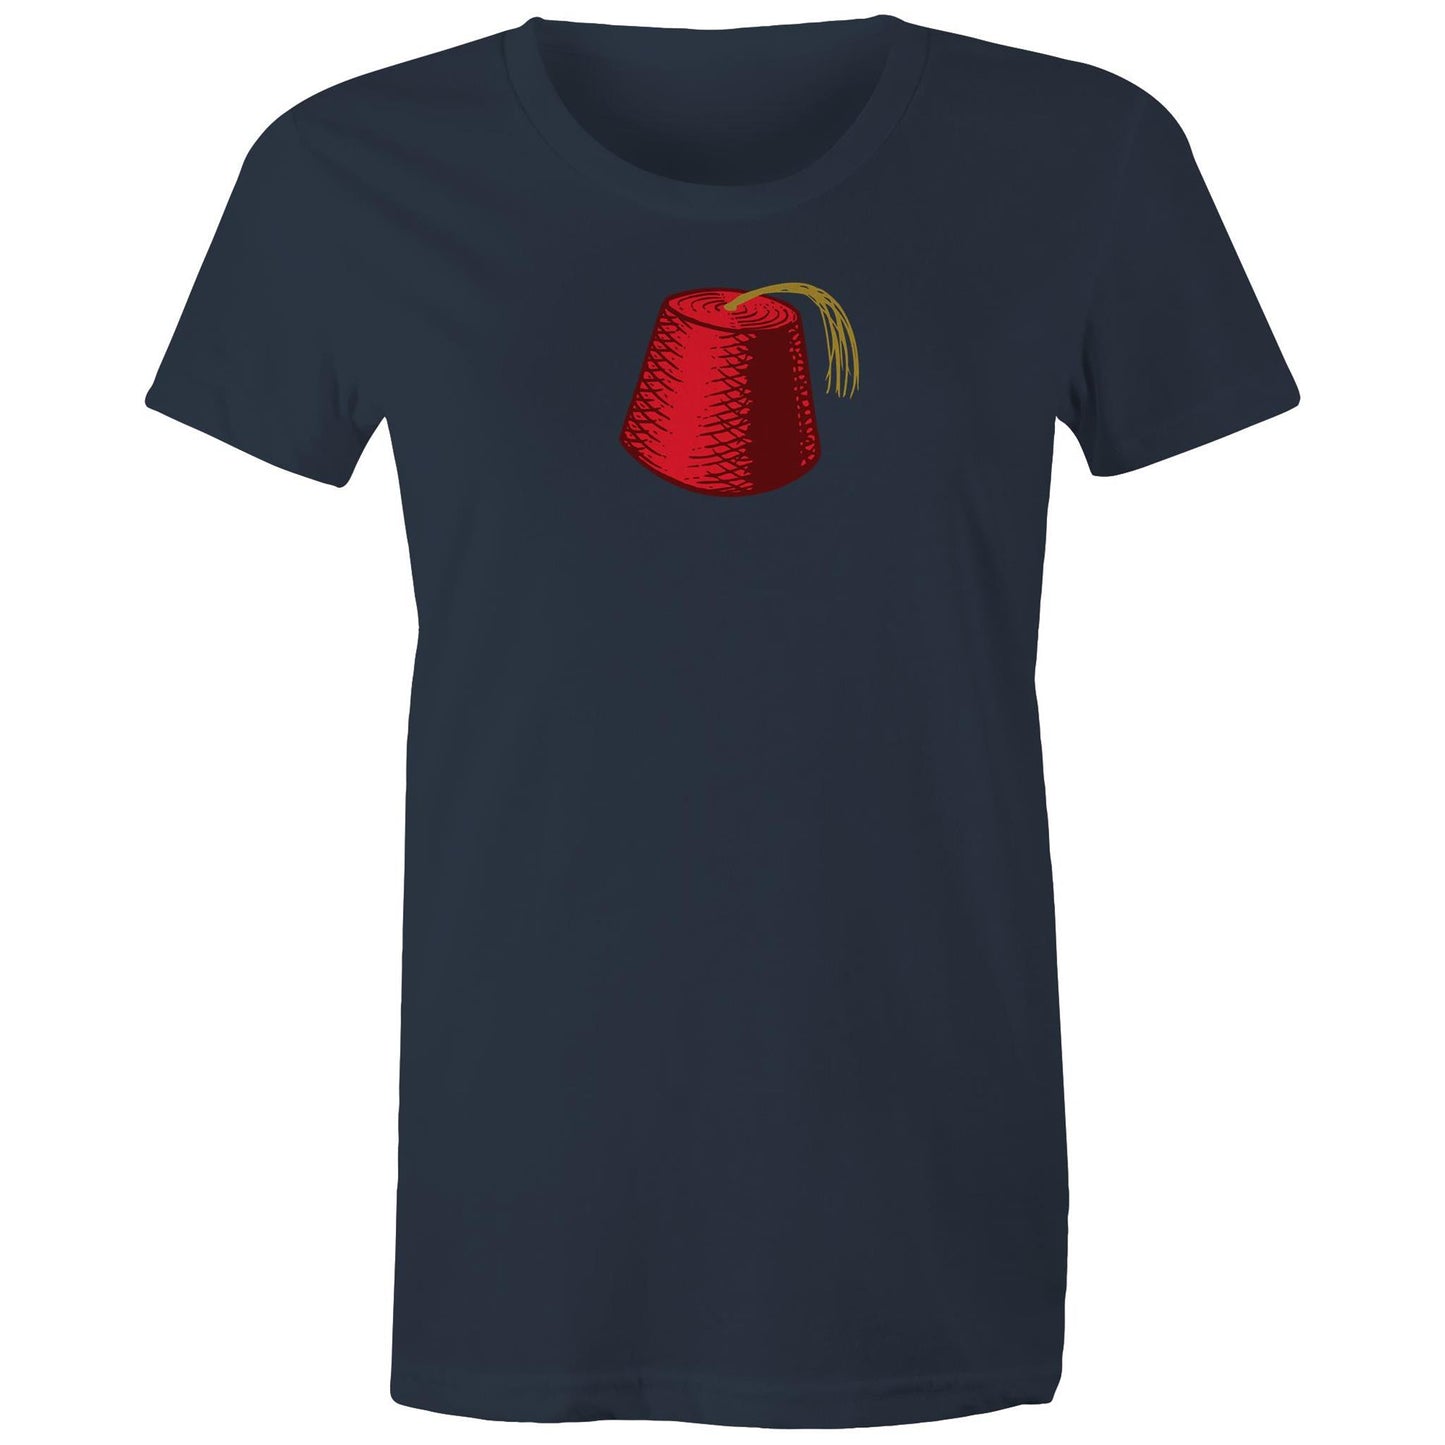 Fez T Shirts for Women